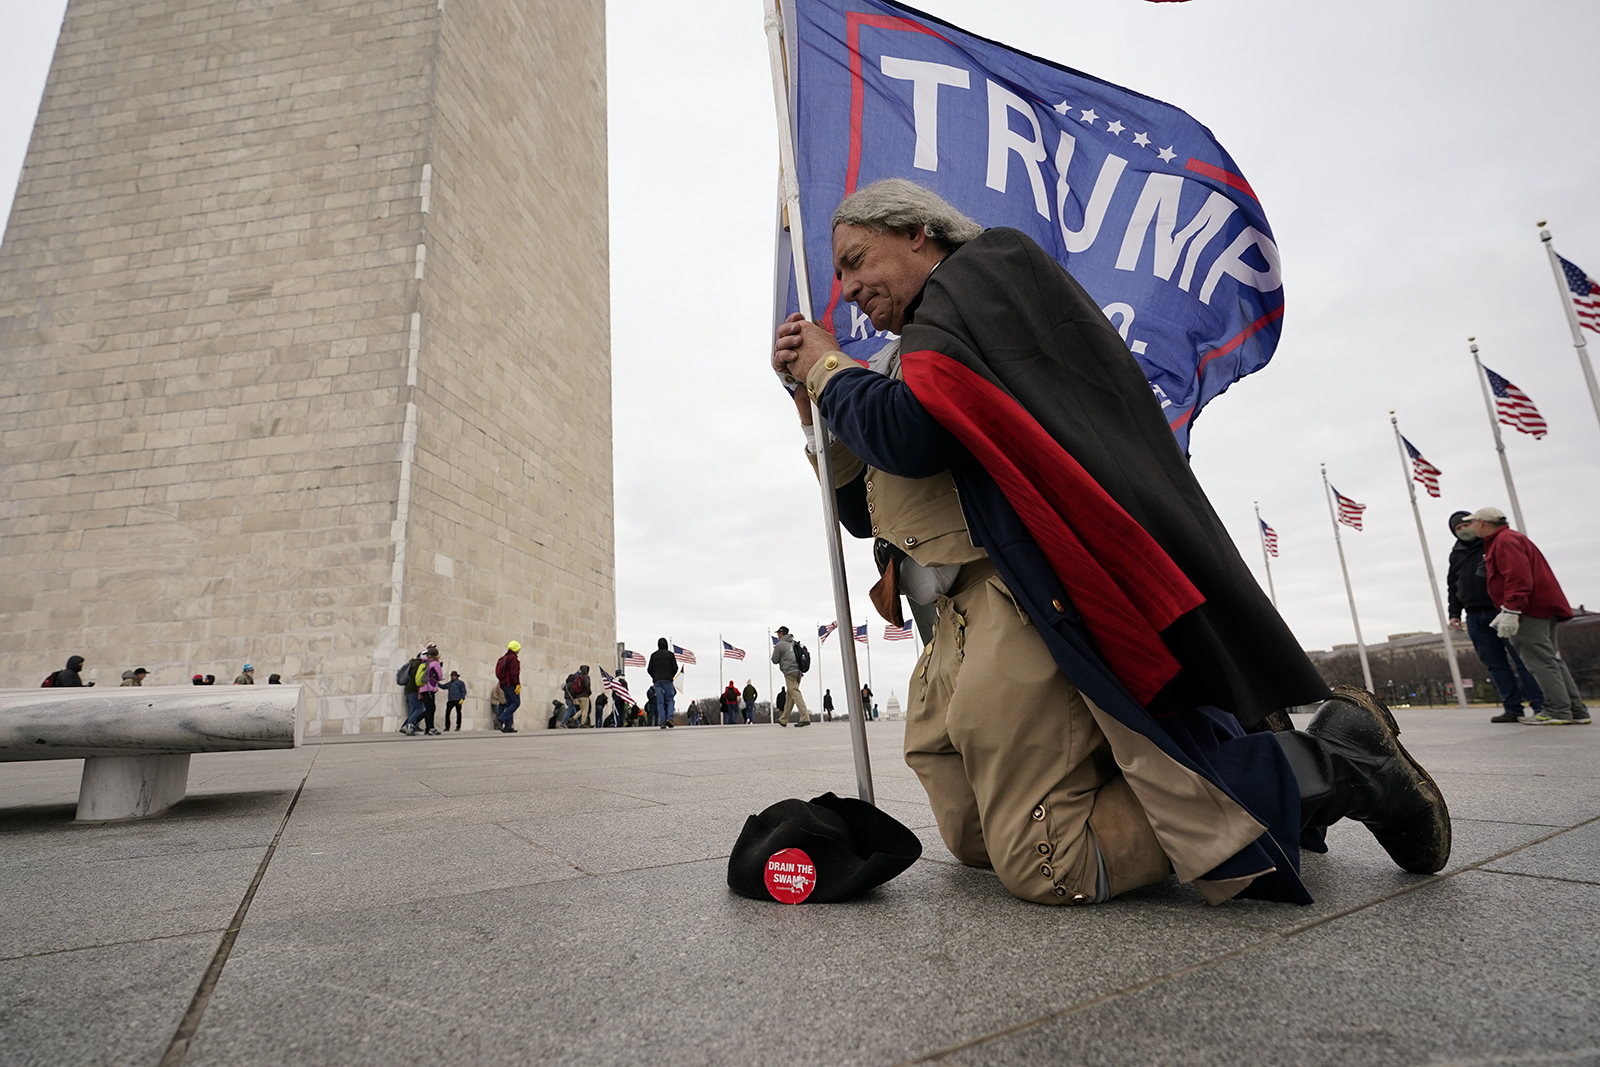 A man dressed as George Washington kneels and prays near the Washington Monument with a Trump flag on Wednesday, Jan. 6, 2021, in Washington. (AP Photo/Carolyn Kaster)